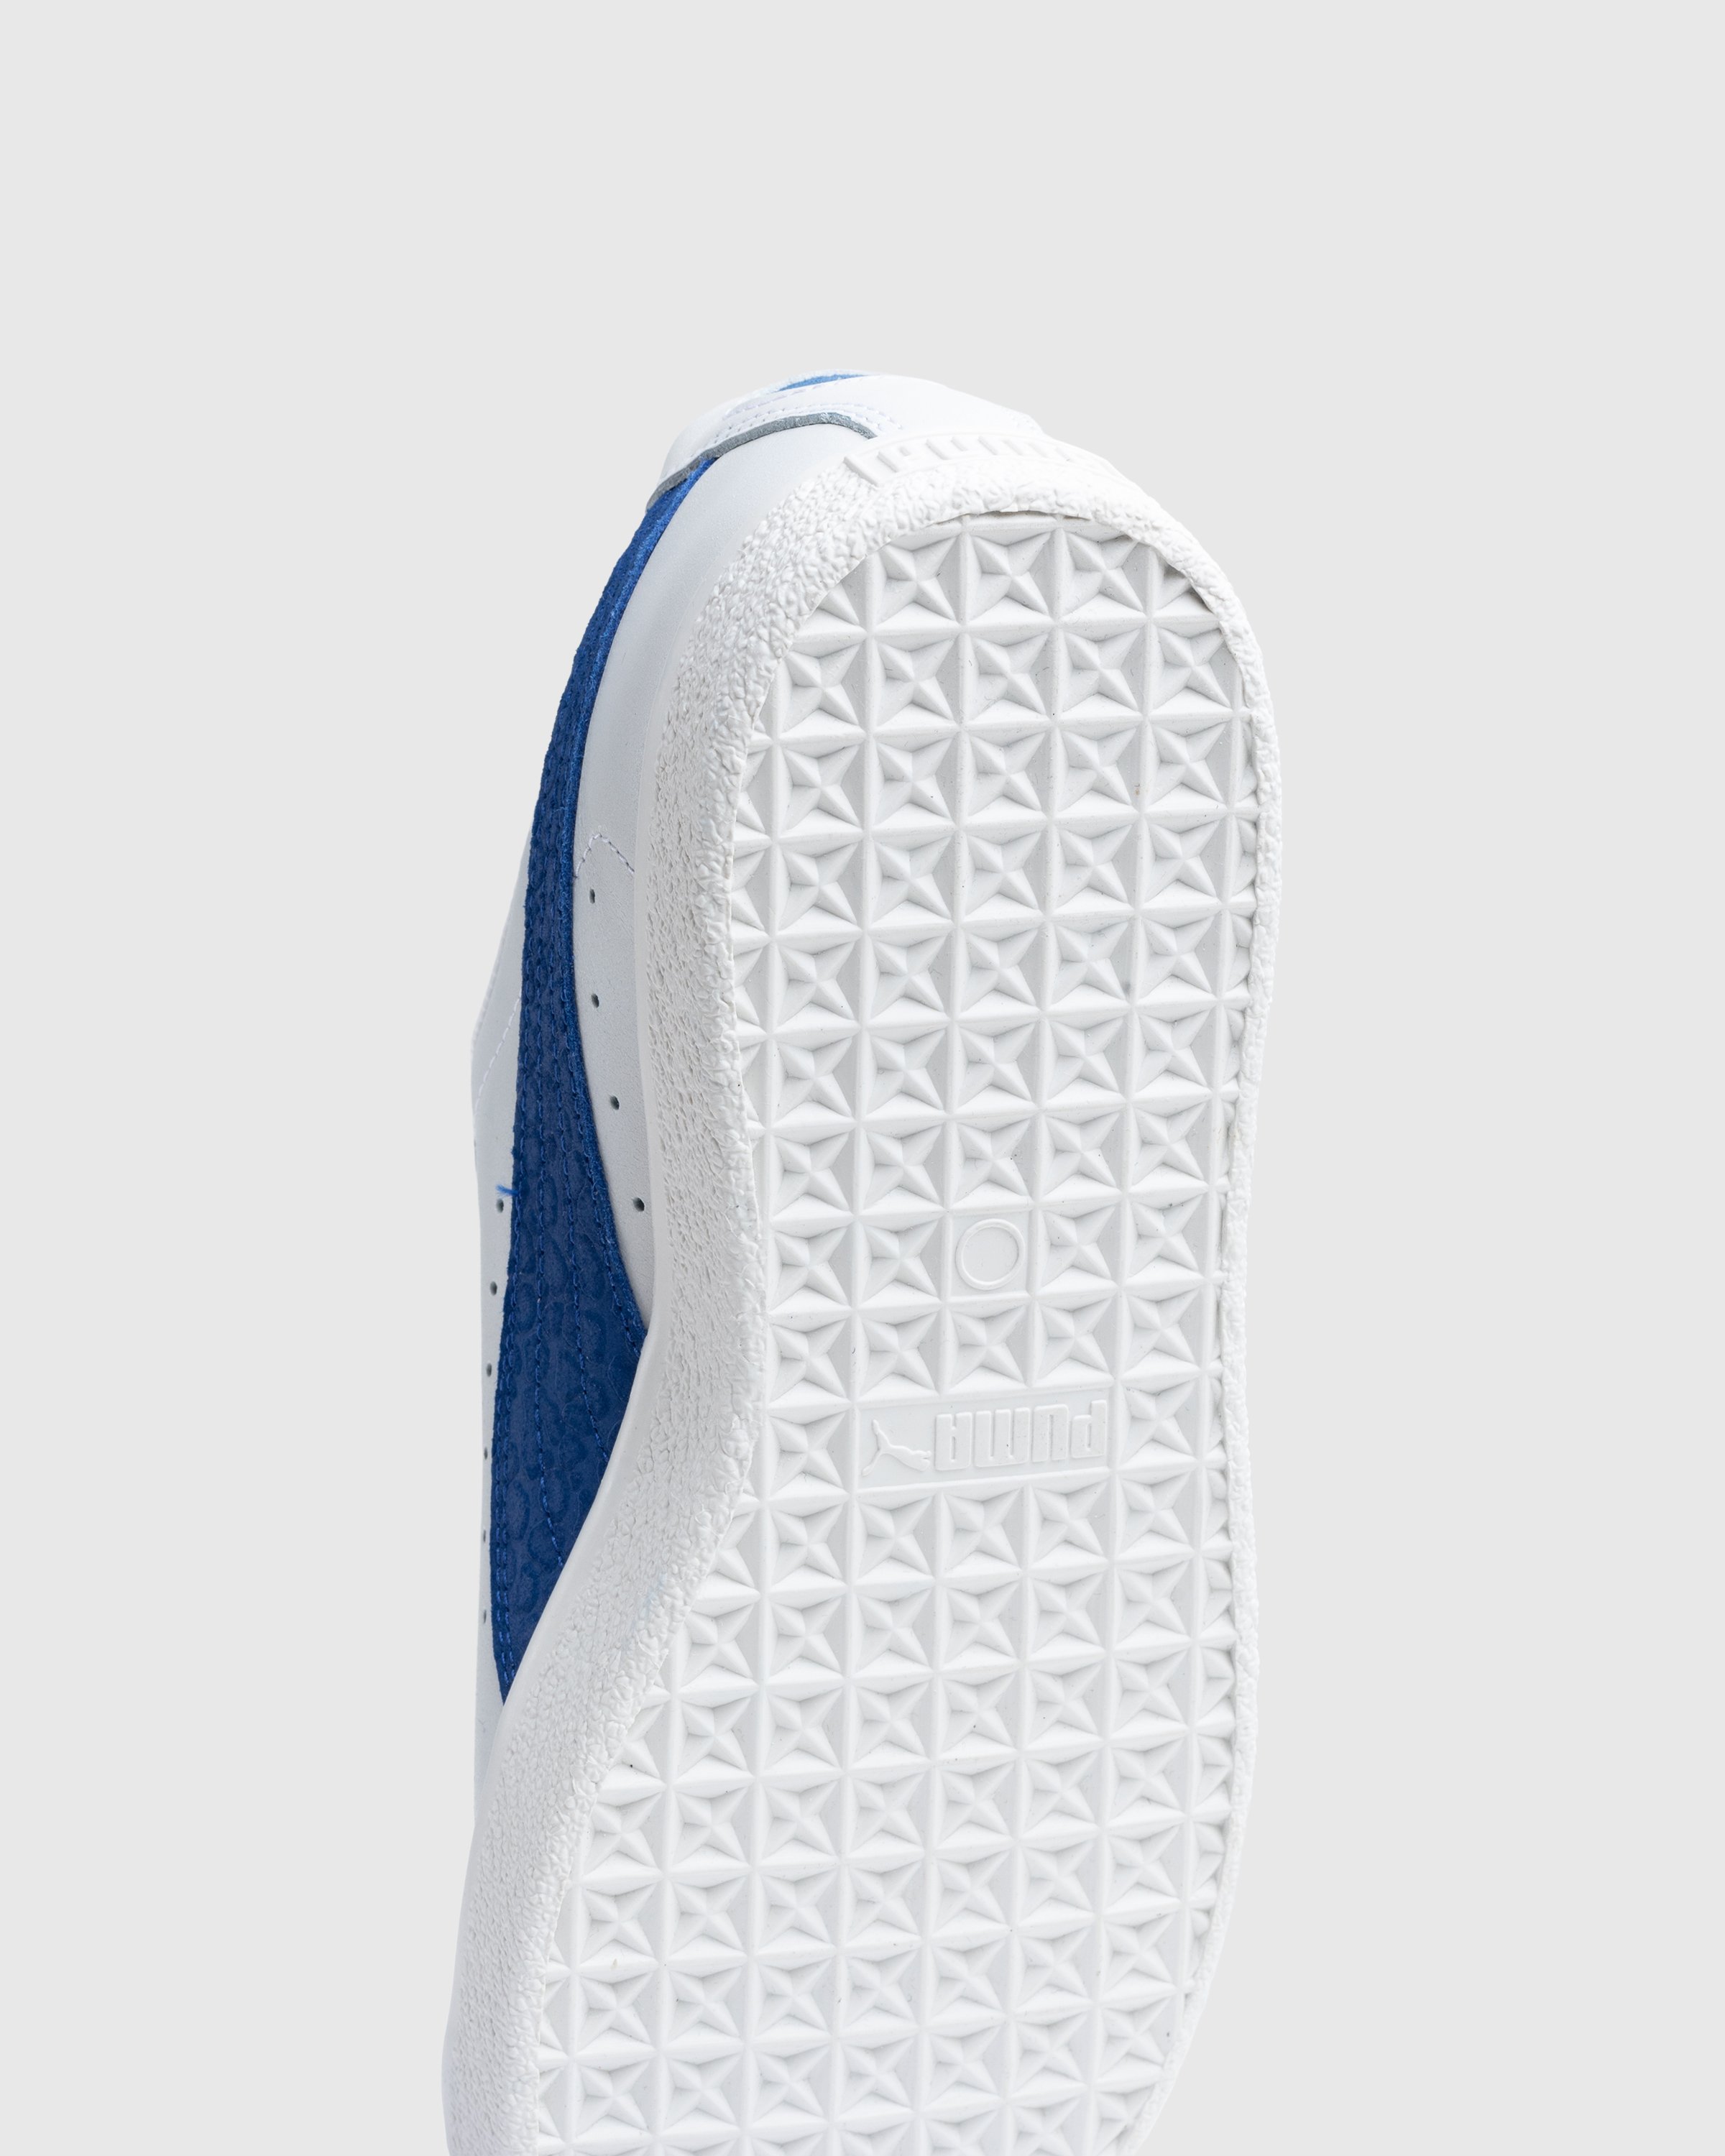 Puma - Clyde Soho (NYC) - Footwear - White - Image 6